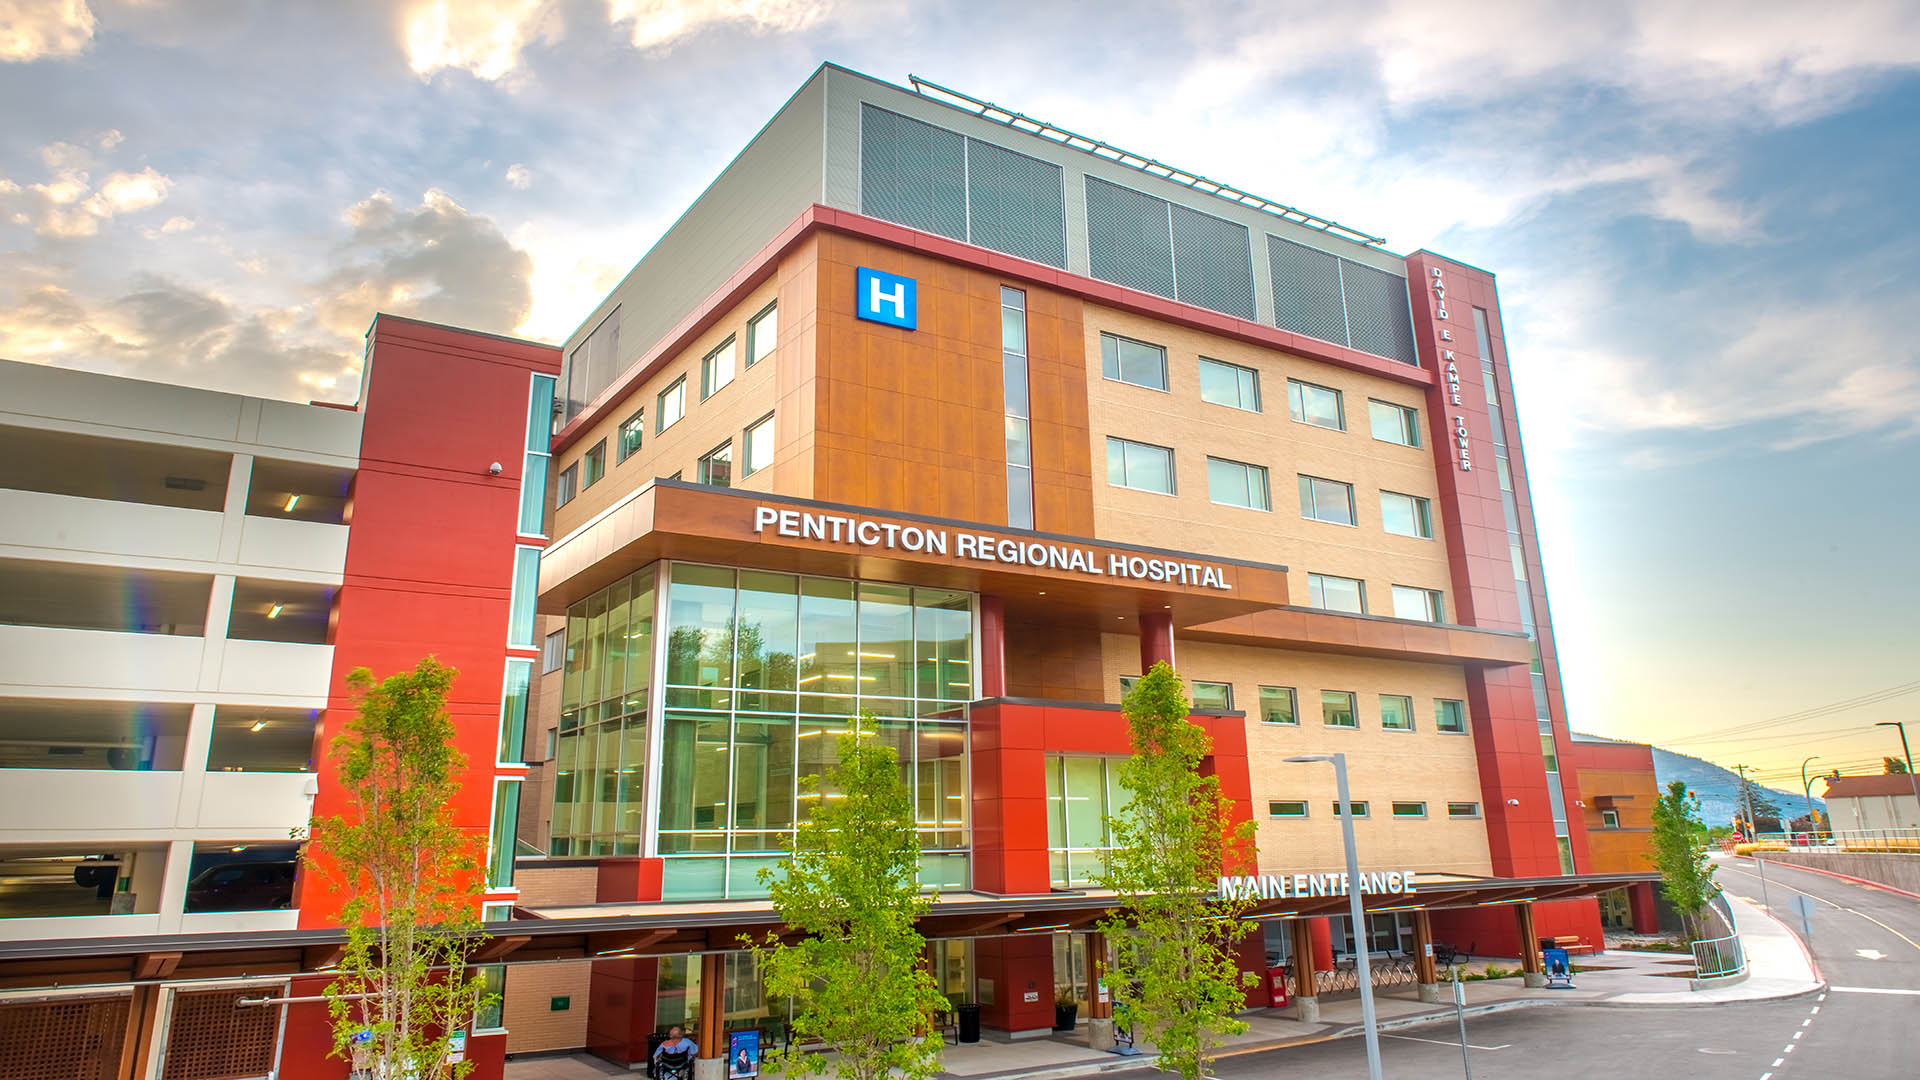 Hospital Storage Solutions Case Study: Penticton Regional Hospital